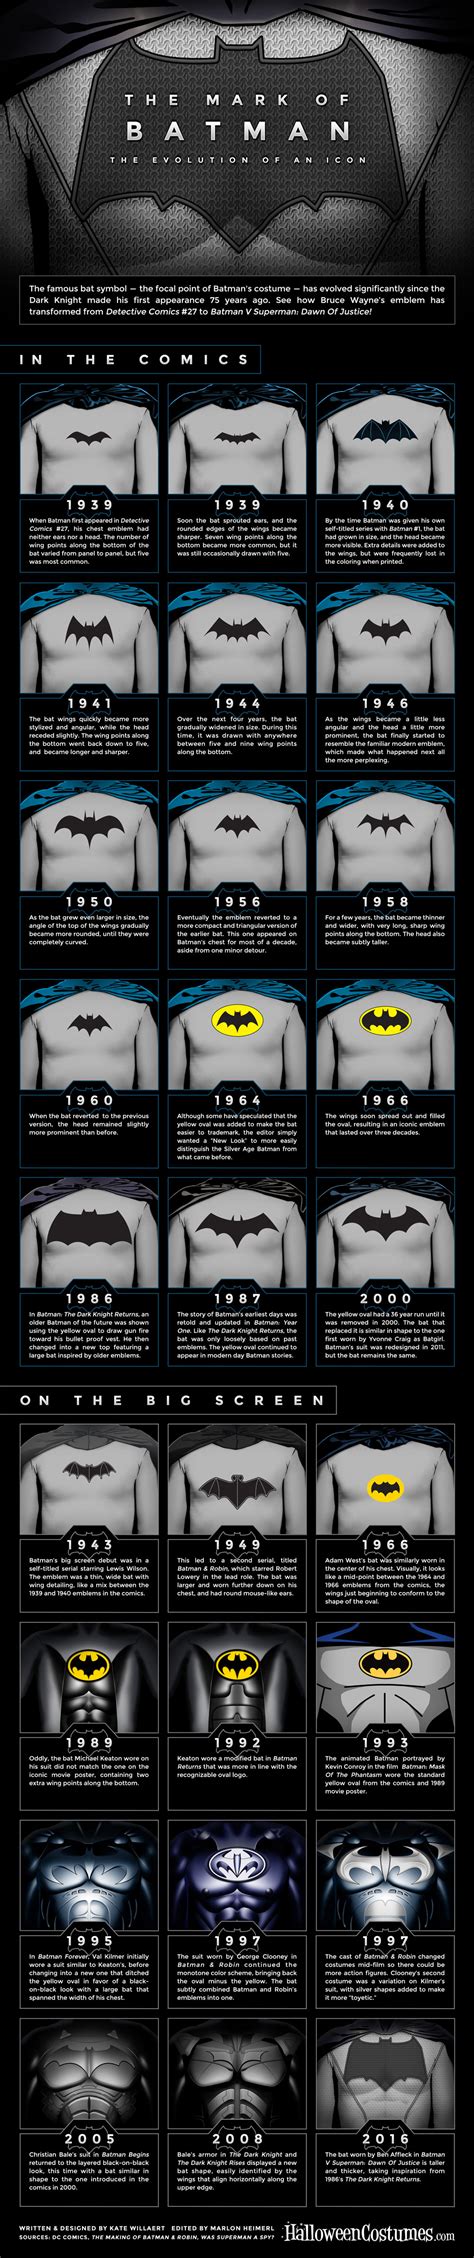 The Mark of Batman: The Evolution of an Icon [Infographic] - HalloweenCostumes.com Blog